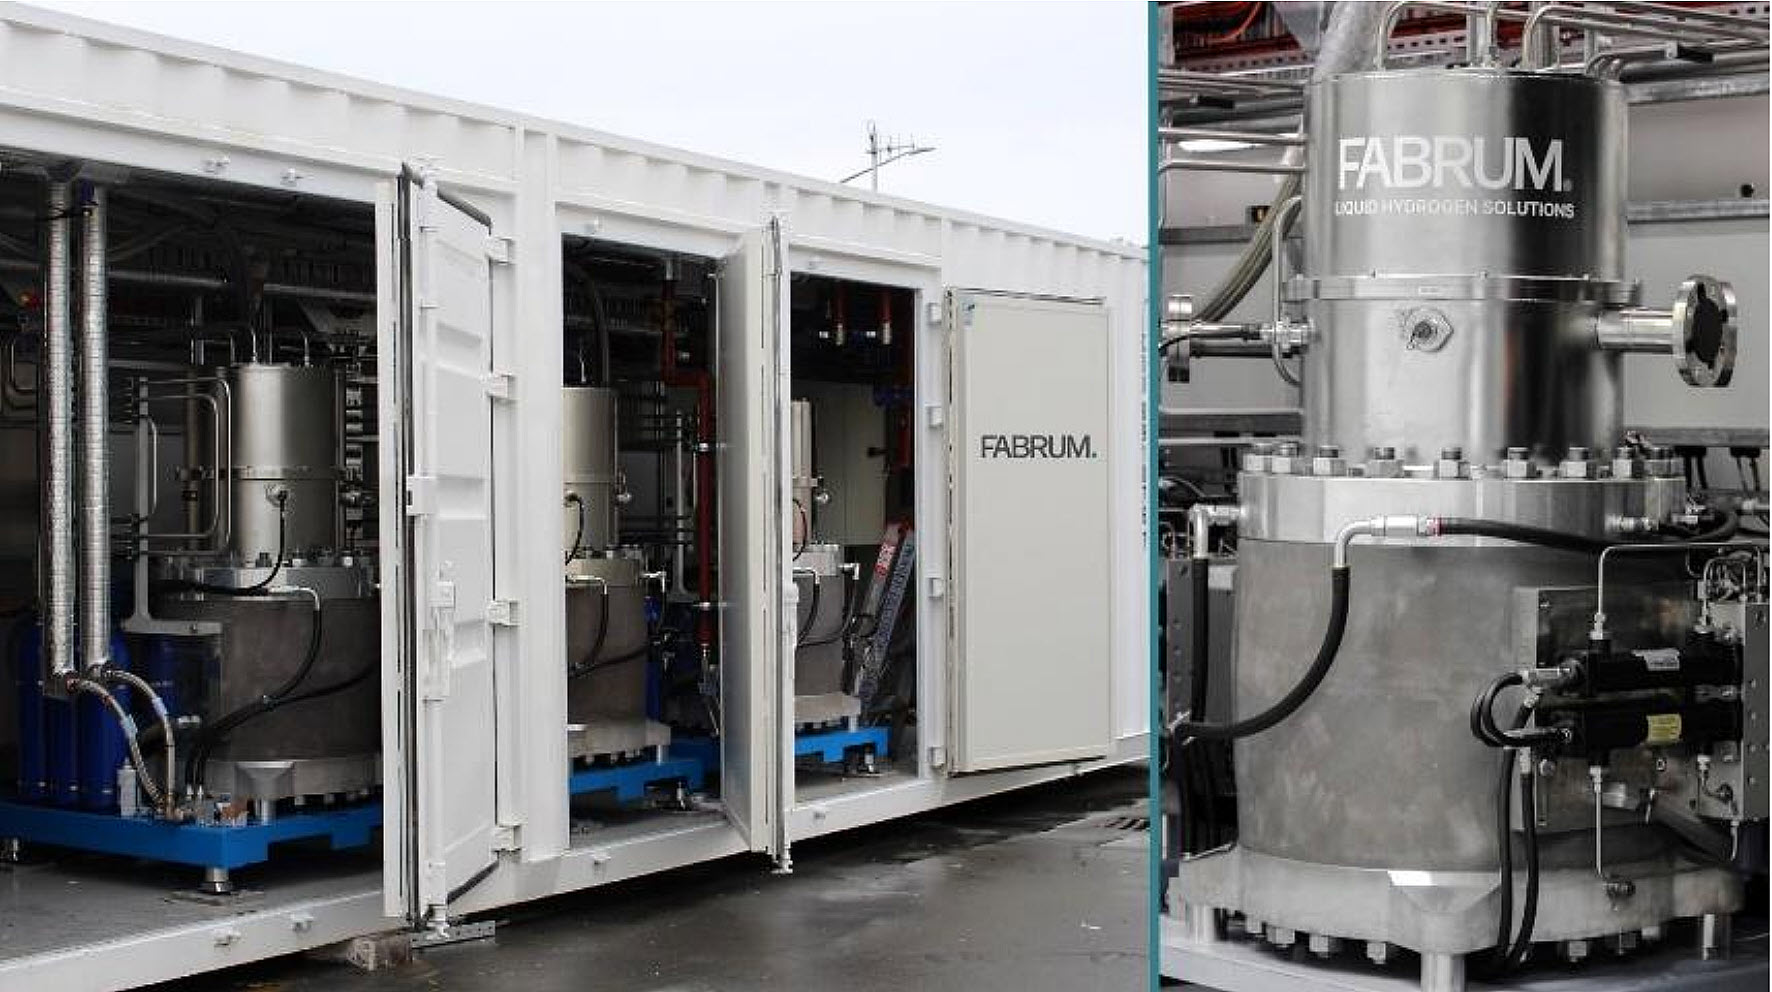 Fabrum’s sub-half-tonne hydrogen liquefier and hydrogen refuelling station news